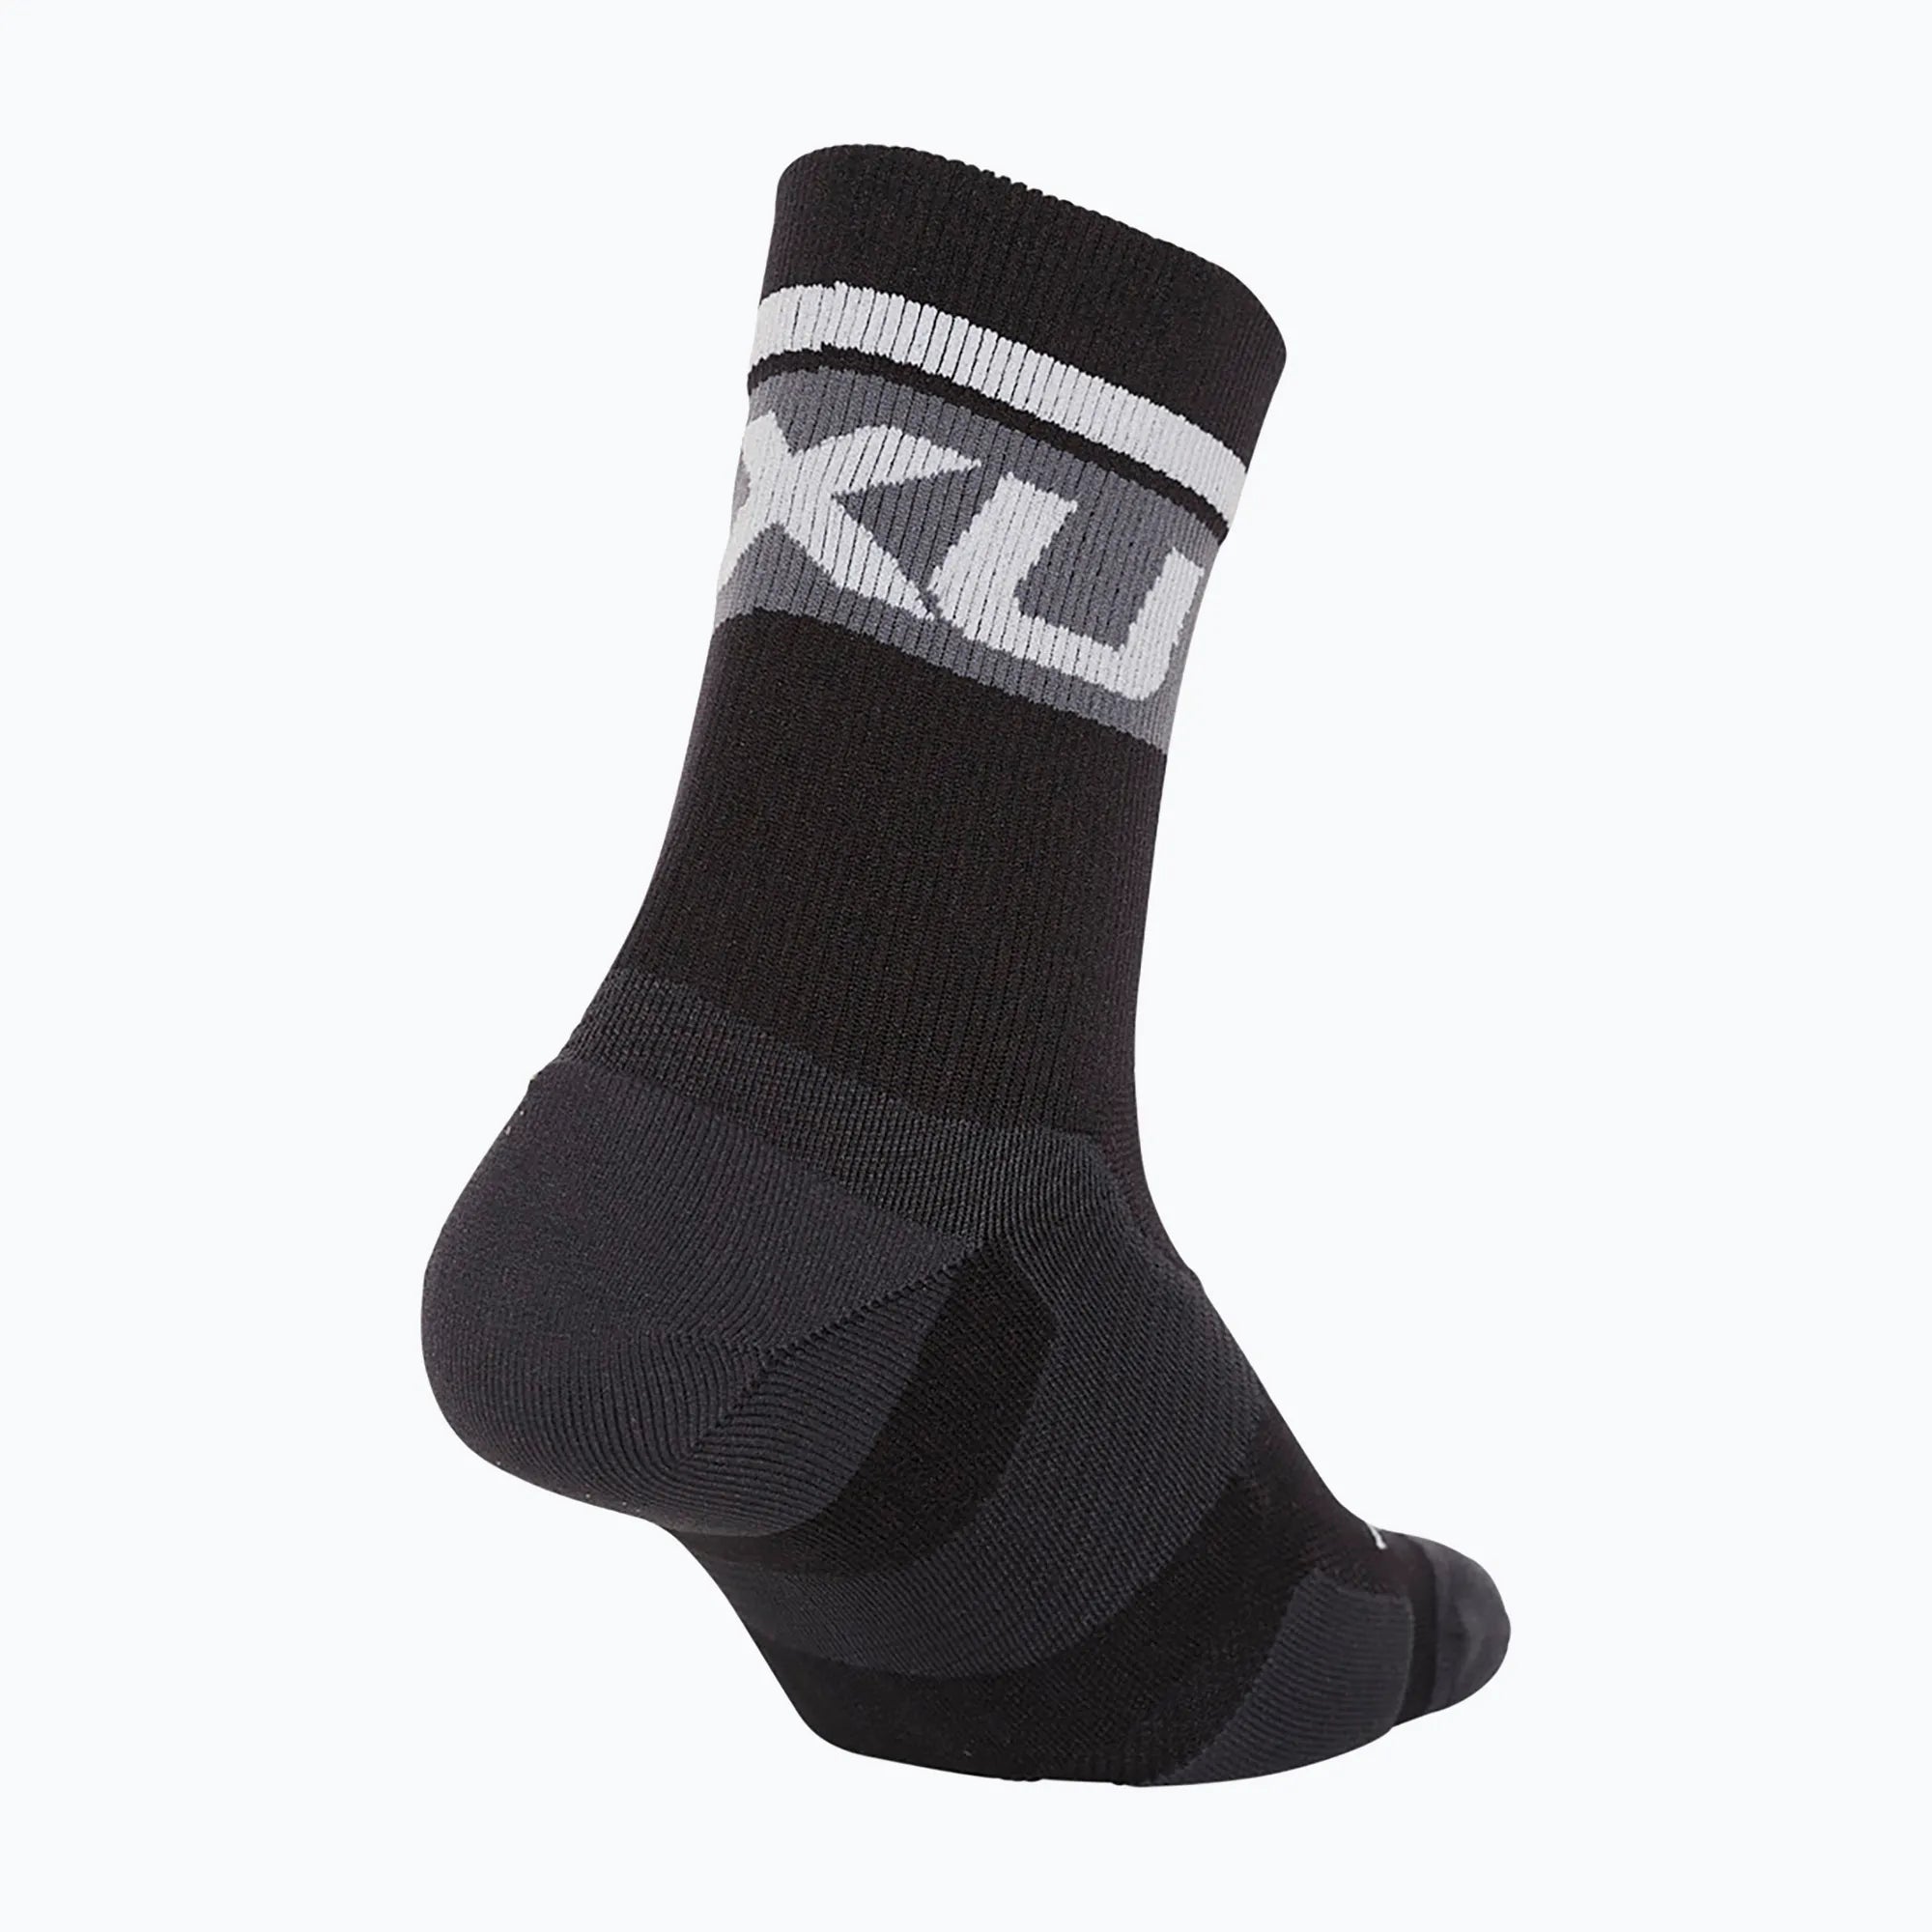 2XU VECTR Cushion Crew Socks, Black/White